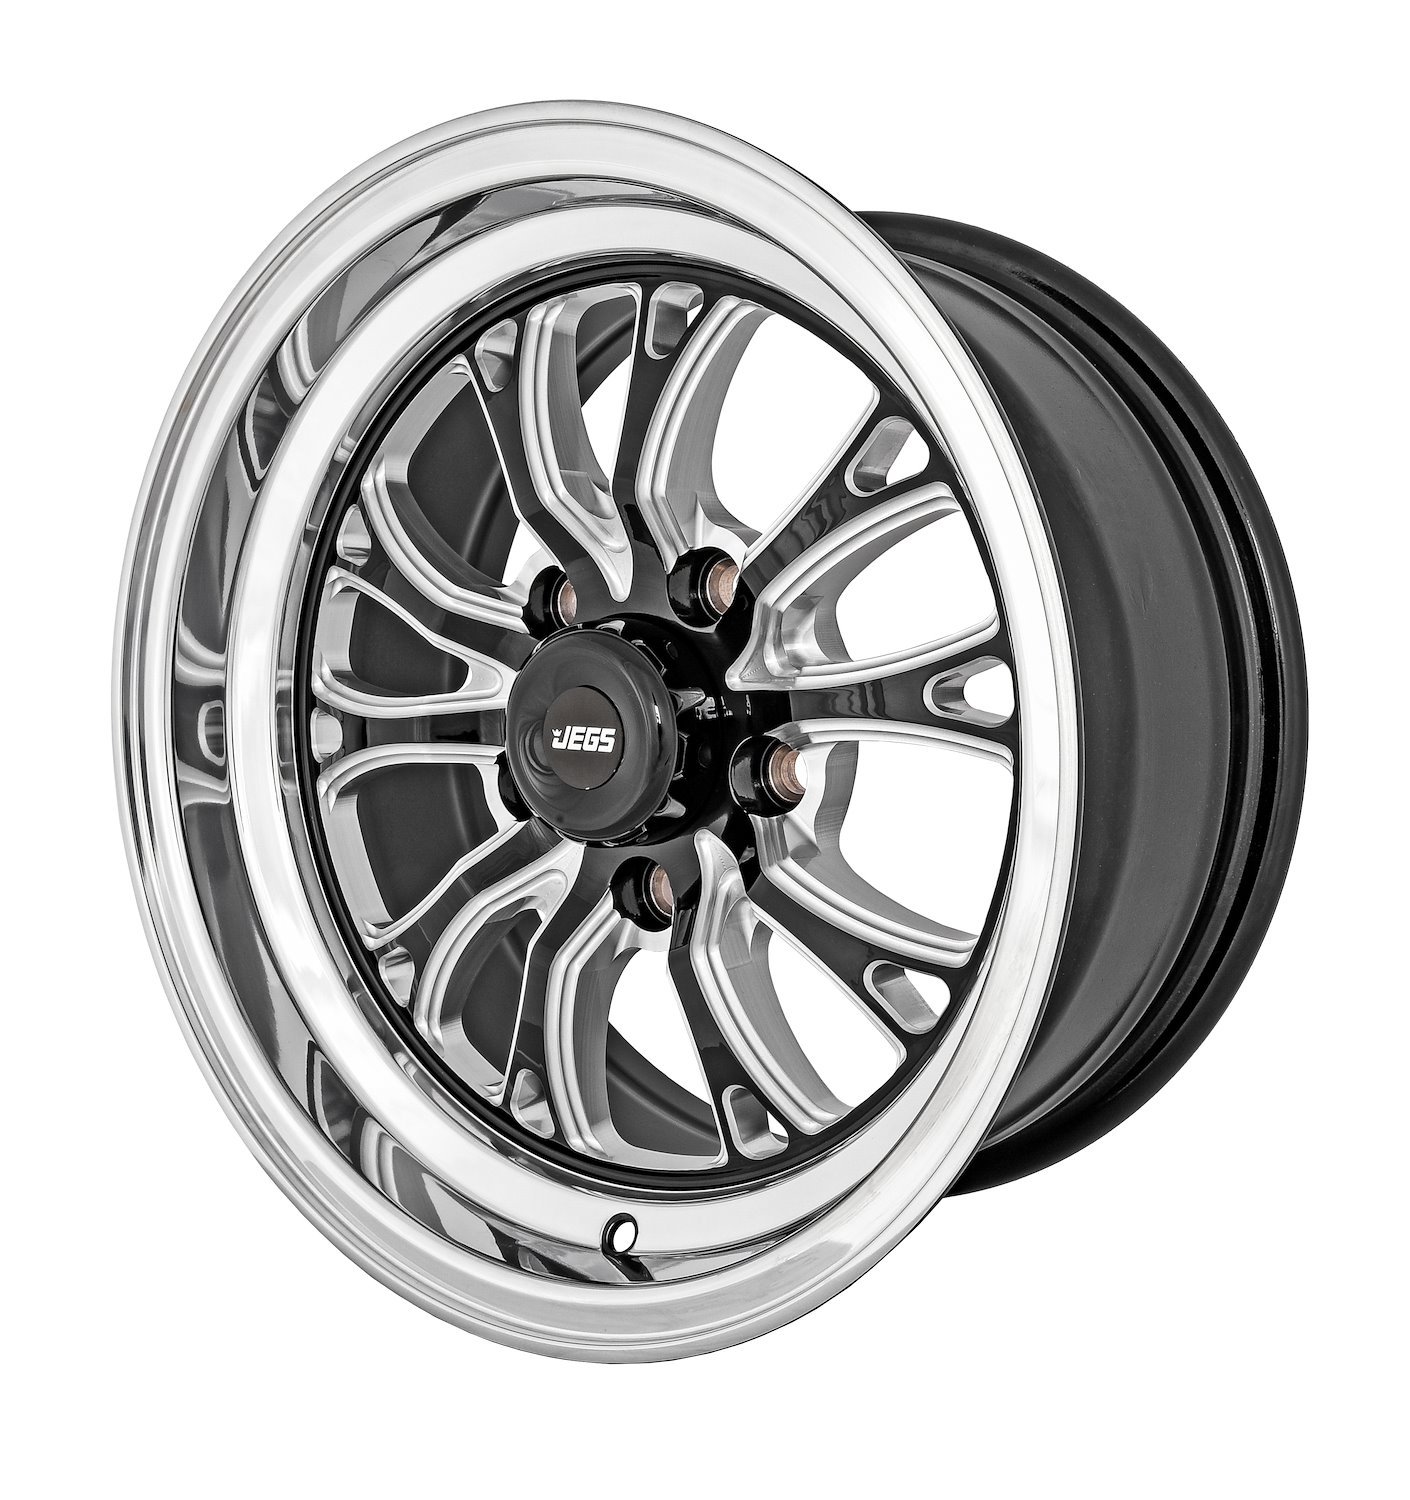 SSR Spike Wheel [Size: 15" x 7"] Polished Lip with Black Milled Spokes